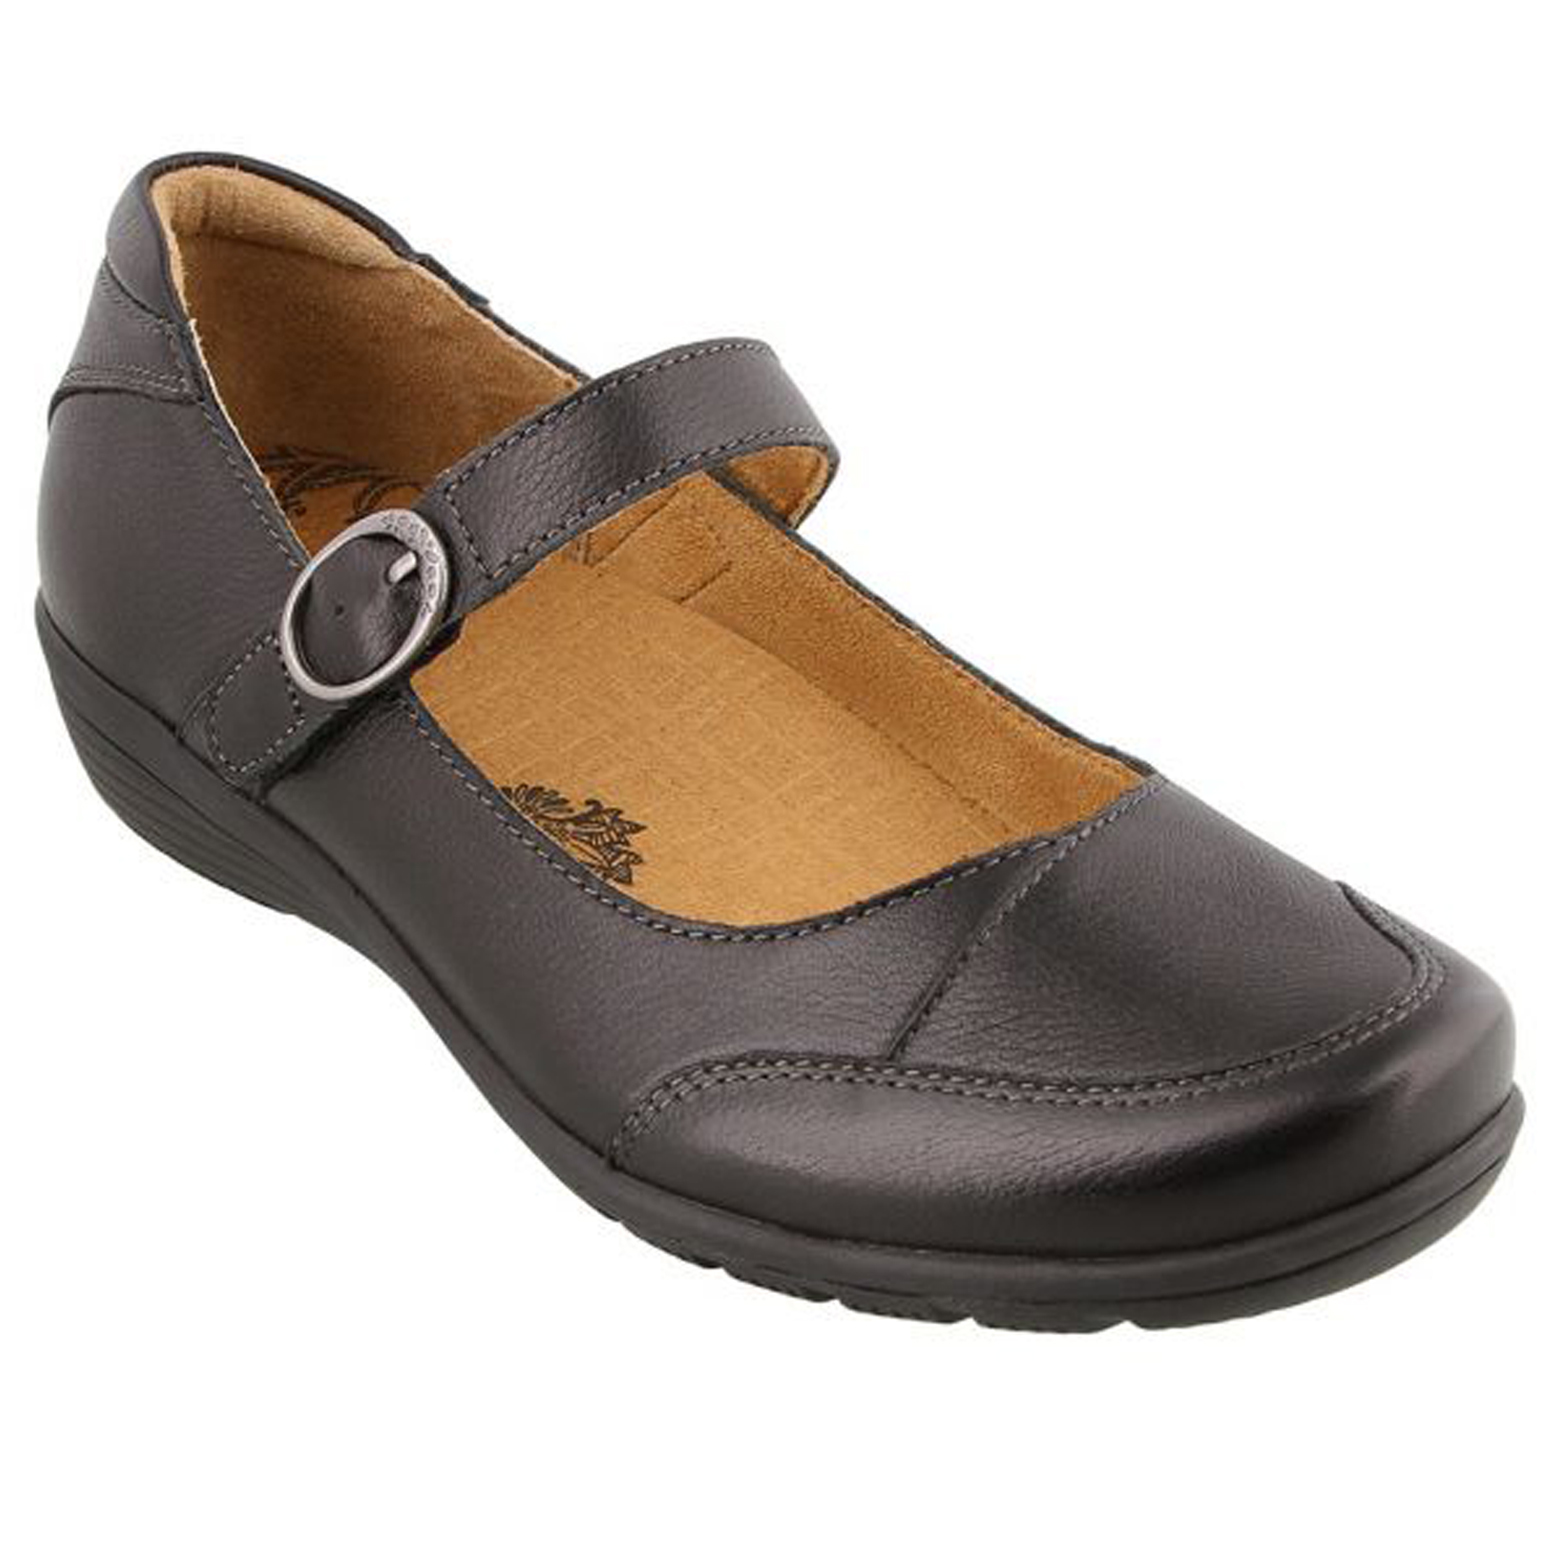 Taos Women's Shoes Black Leather Shoe Roads